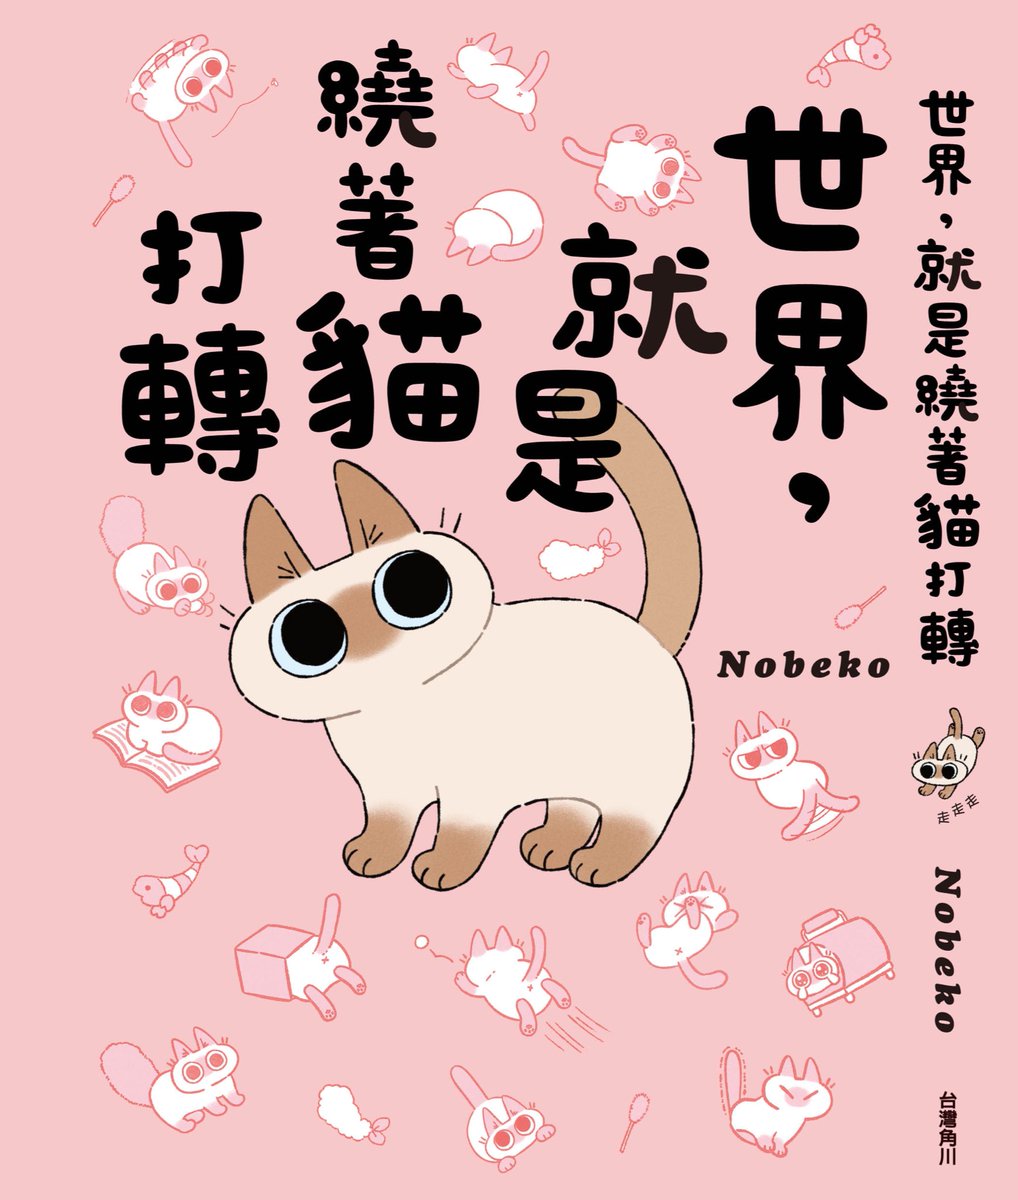 ('ω'o[お知らせ]o
 #シャム猫あずきさんは世界の中心 
の台湾版が台湾角川様よりでますー!??
発売日は7月23日!よろしくねっ!!
すごいぞー!ぜんぶ外国語だぁ! (ᐛ?) 